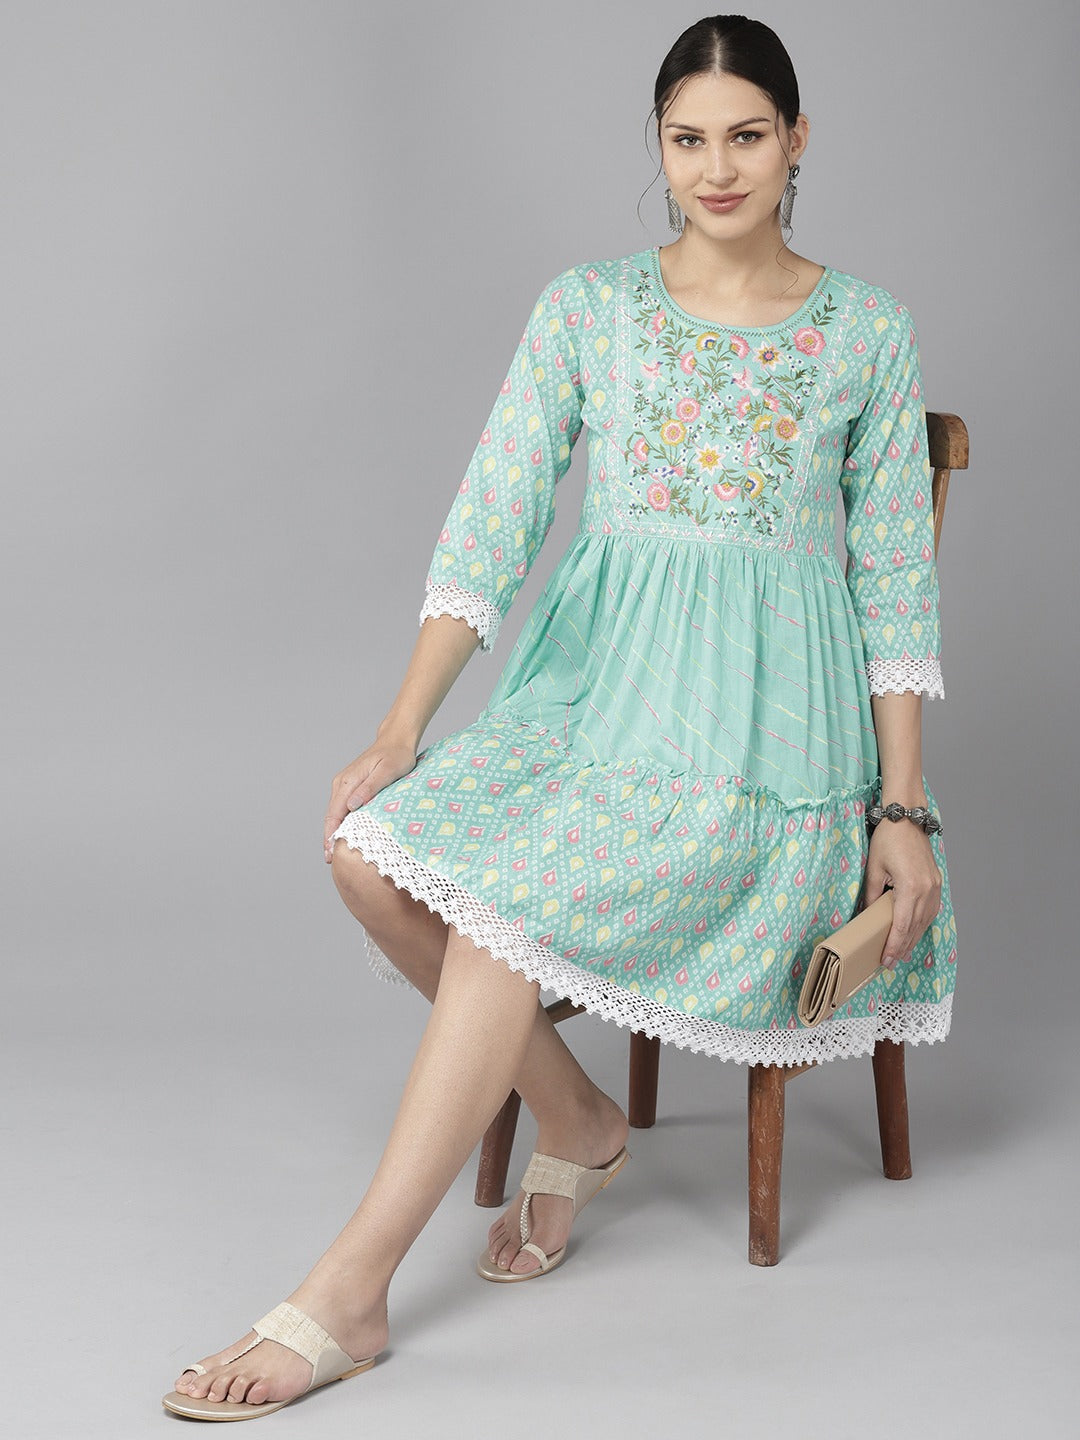 Embroidered Cotton A-Dress-Yufta Store-1196DRSSBS